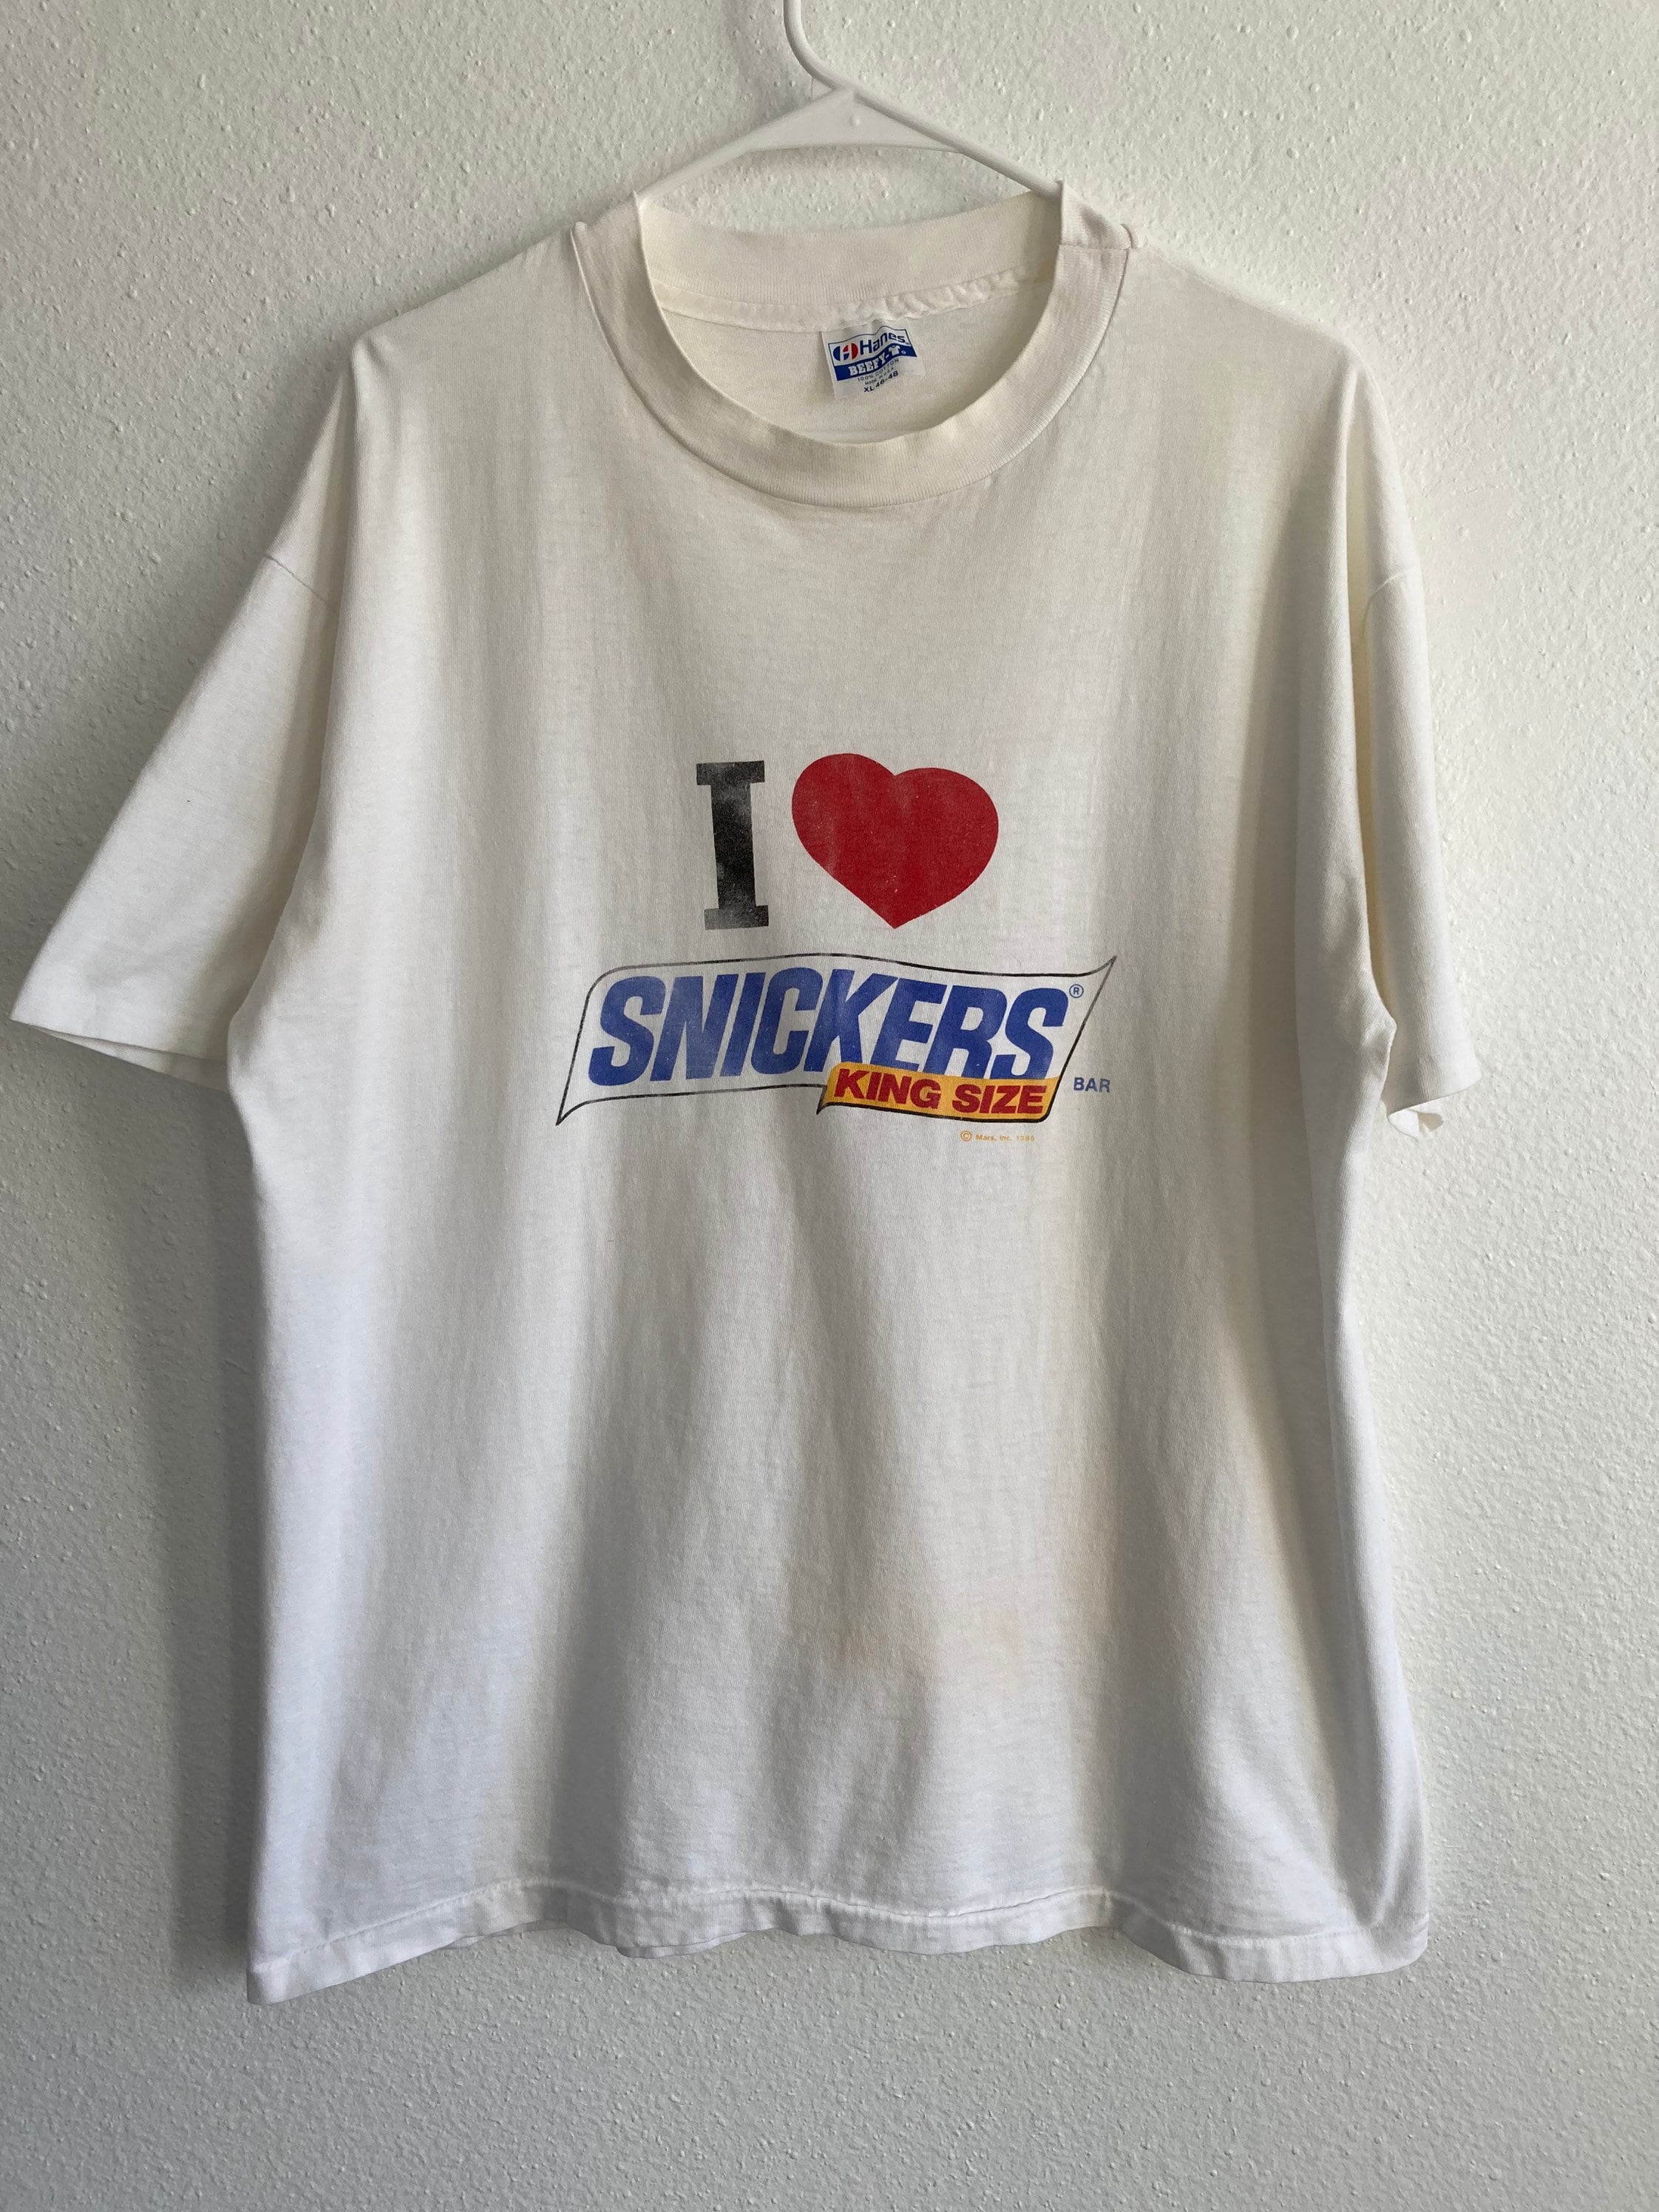 Vintage Snickers Bar King Size 1985 Men's XL White 80s Promo Shirt